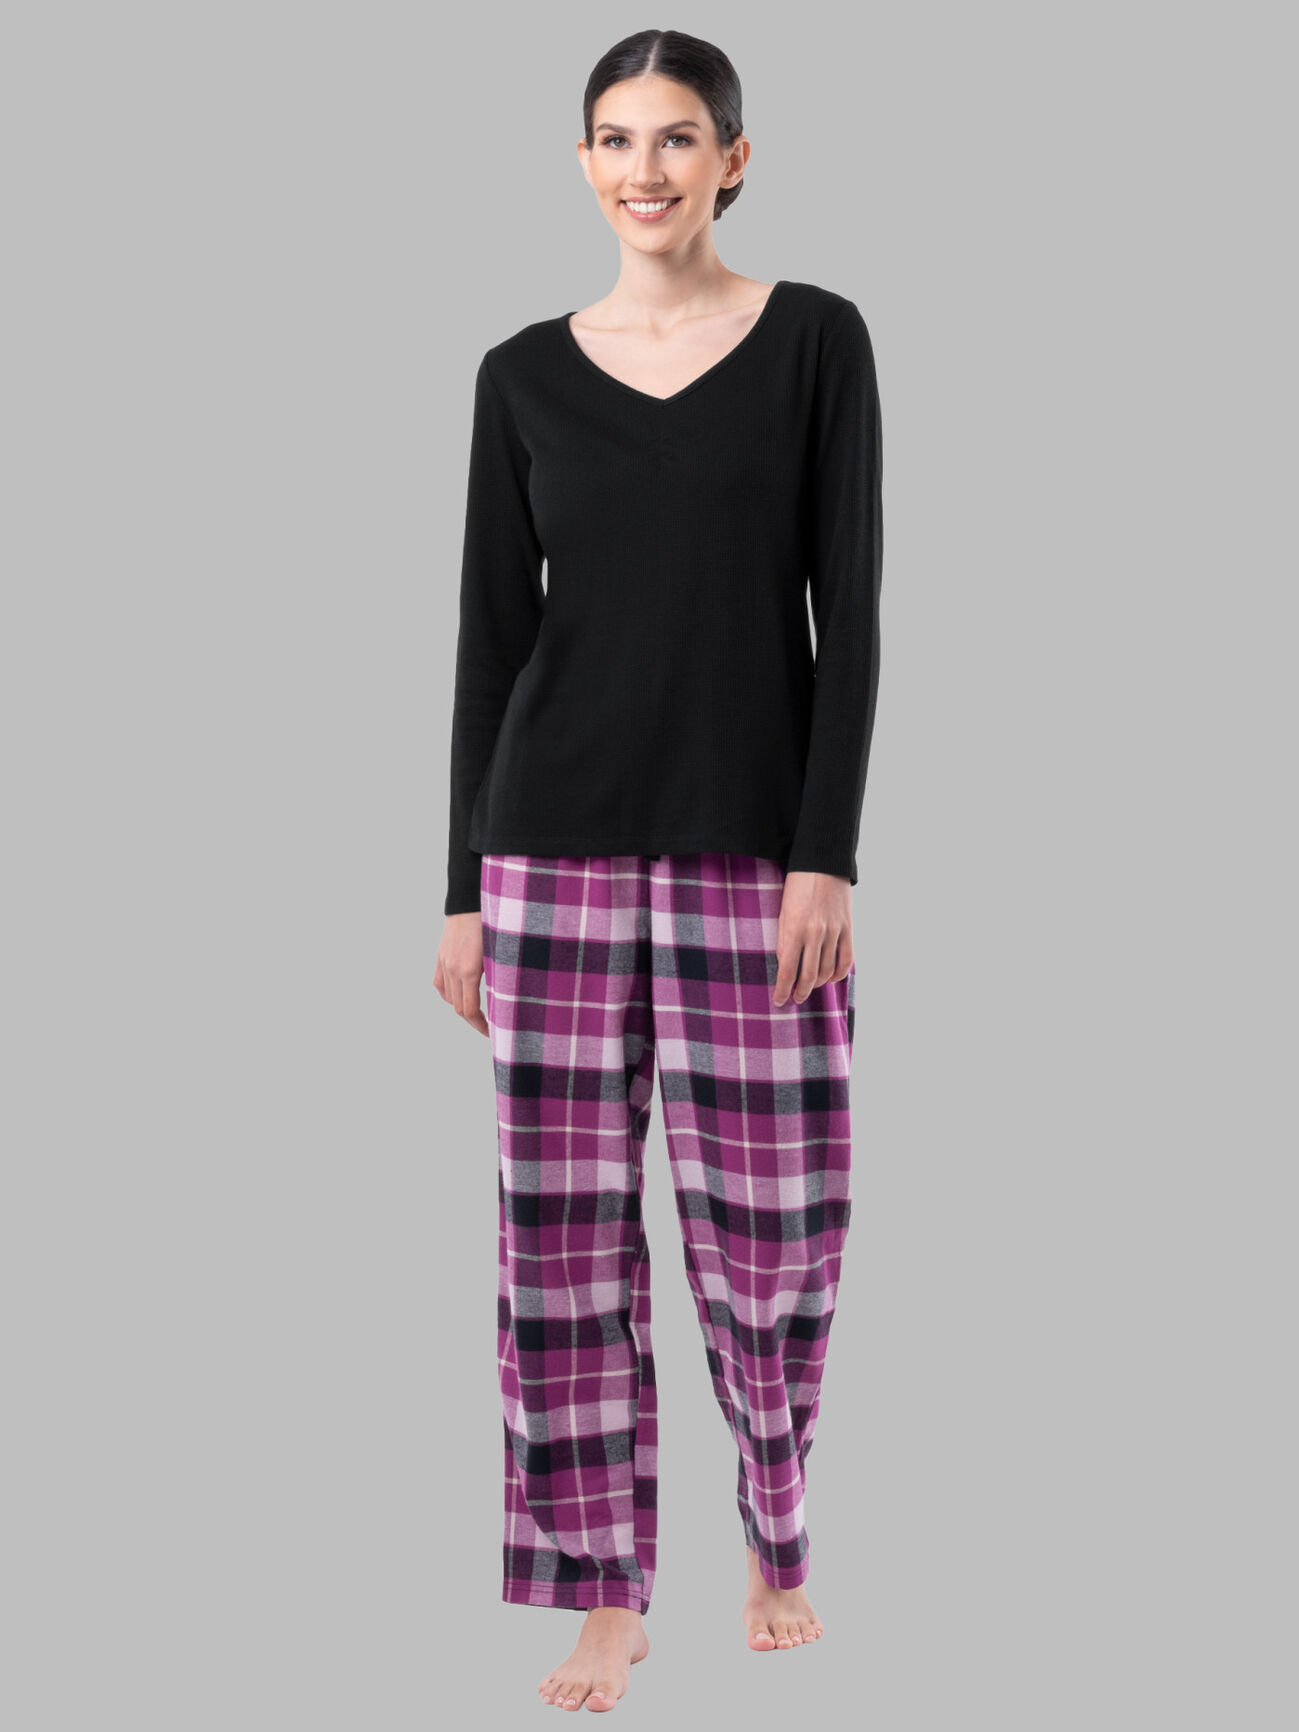 Buy Women's Flannel Pajama Pants - Ladies' Soft Plaid Pajama Pants -  Comfortable pajama pants for women- Lounge Pants-Pack Of 3, Set-3, Large at